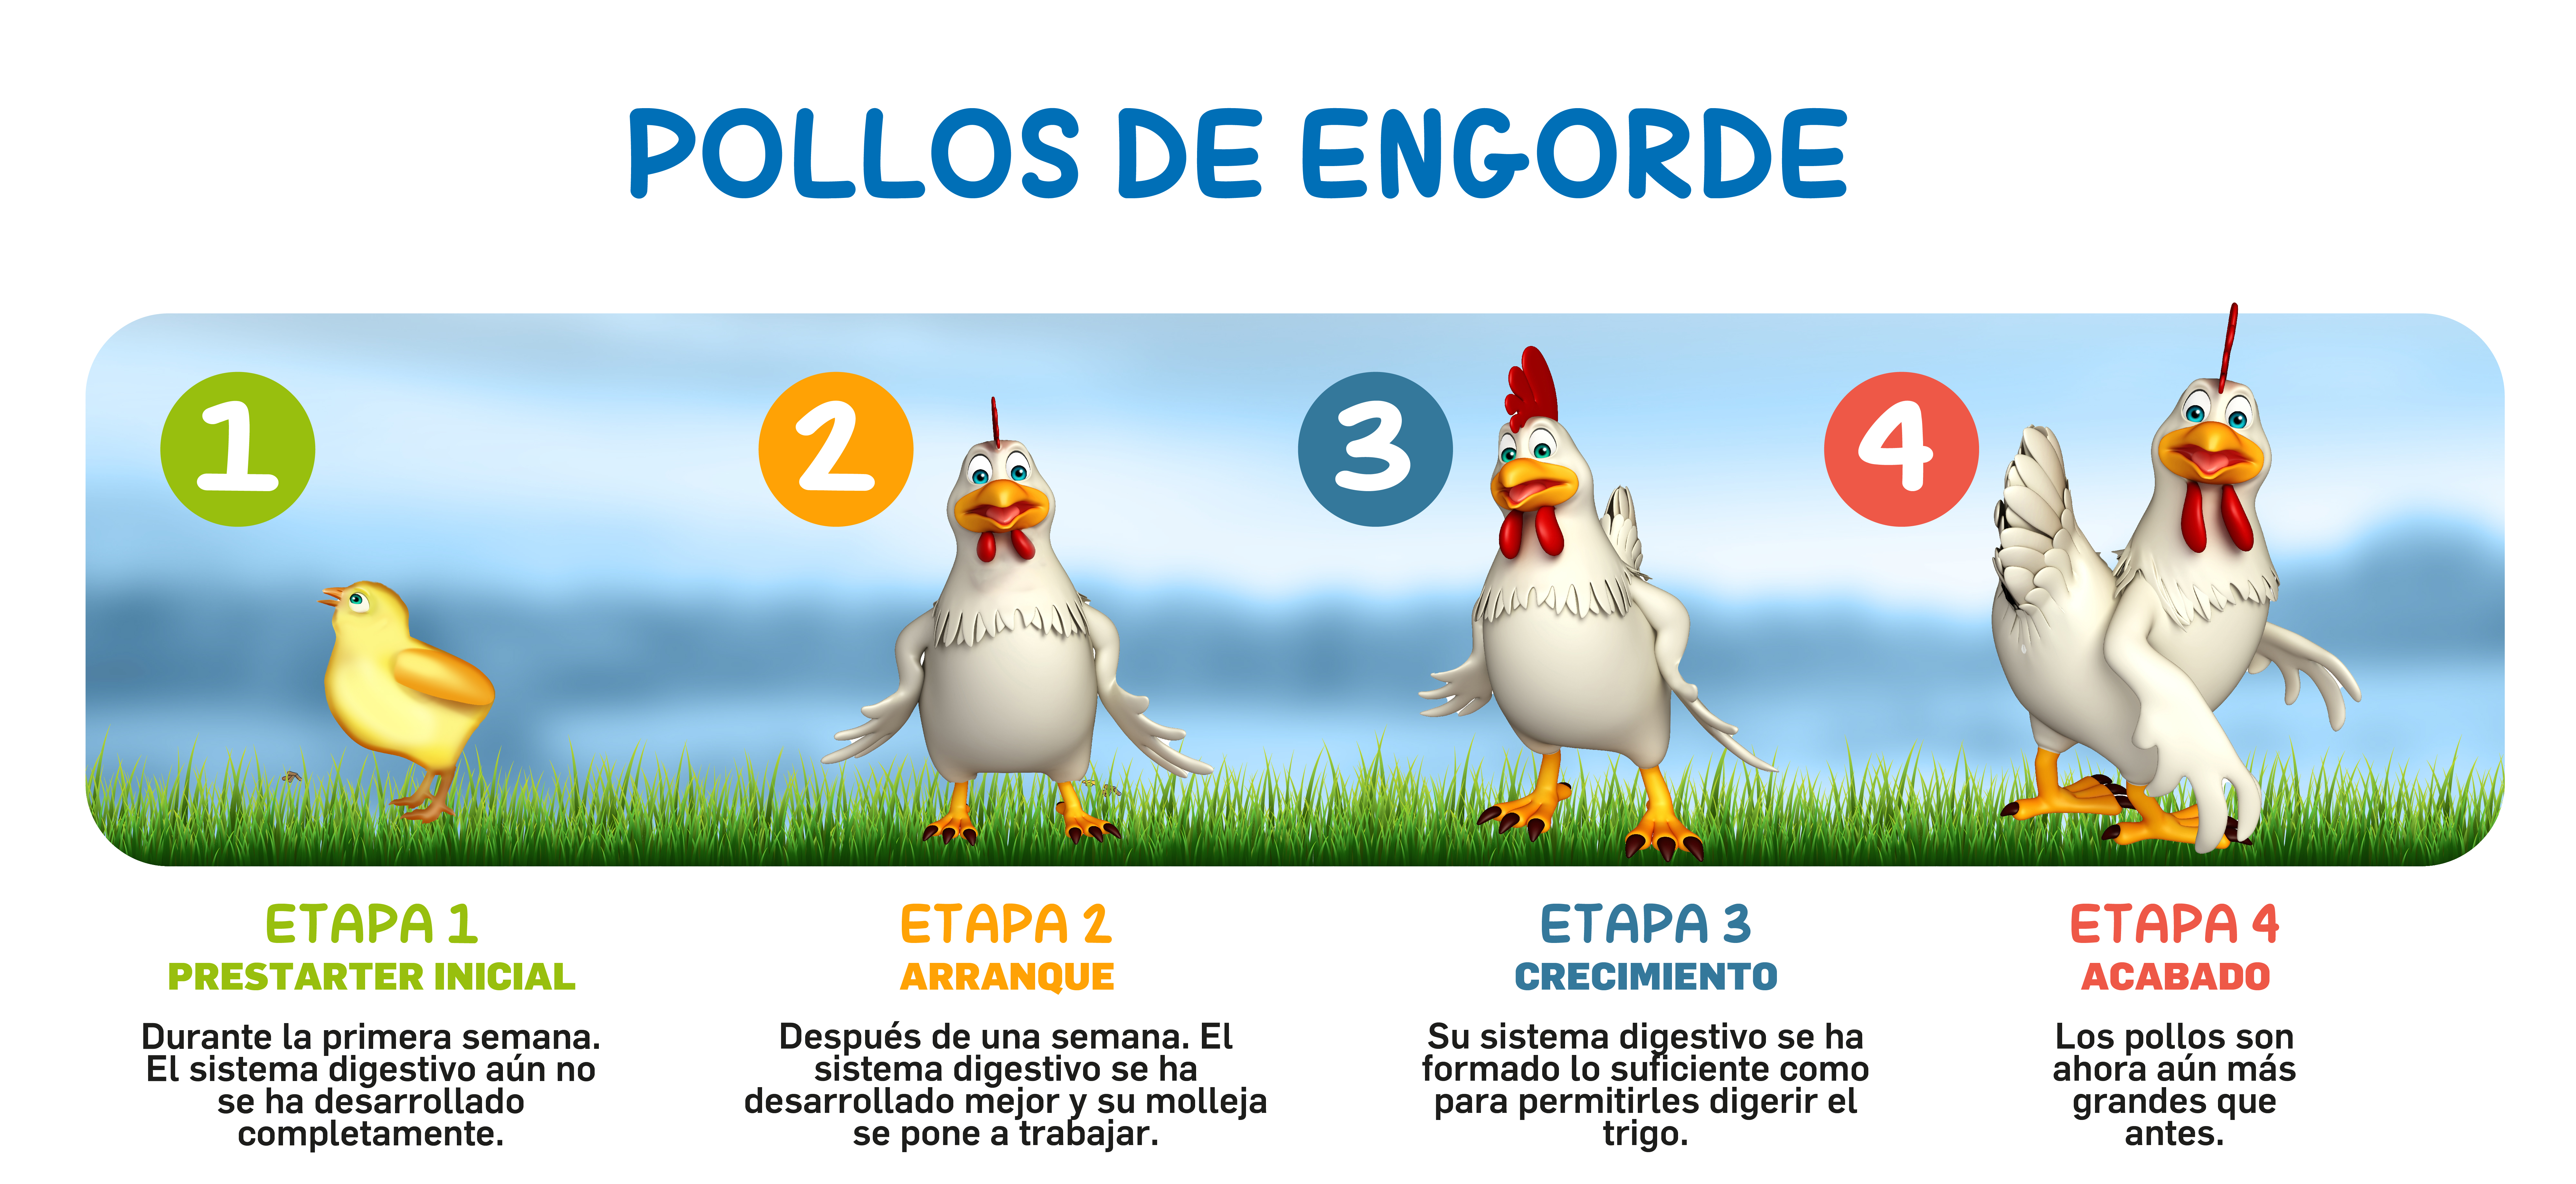 DH_infografia_etapas_aves_pollos_engorde.jpg